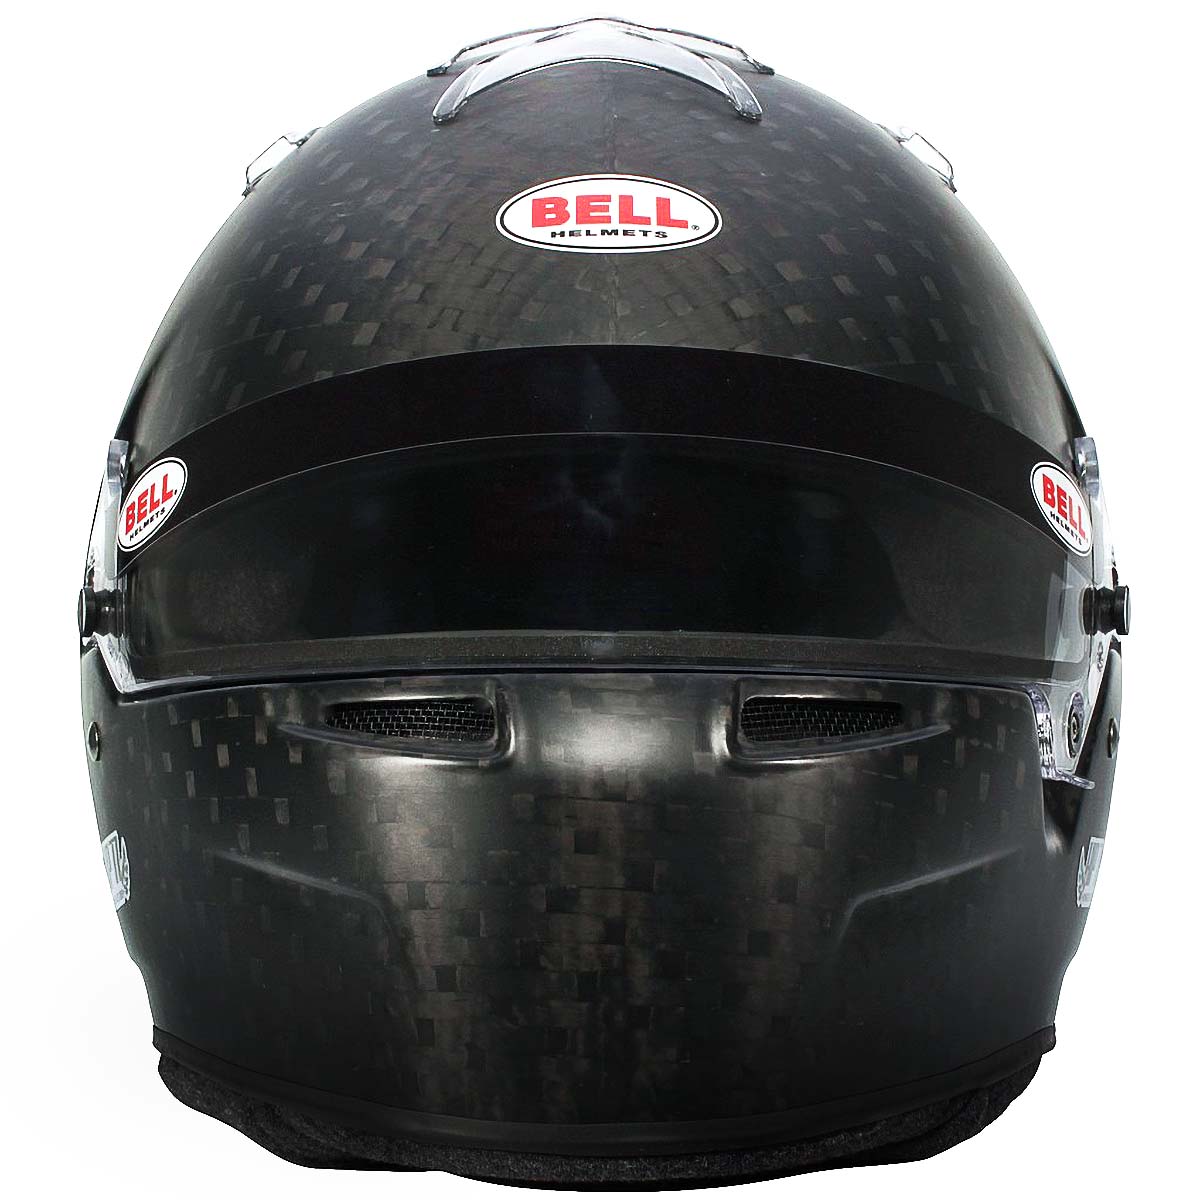 Bell Racing Helmet HP77 Carbon fiber 8860 FIA Snell 2020 Front lower Image